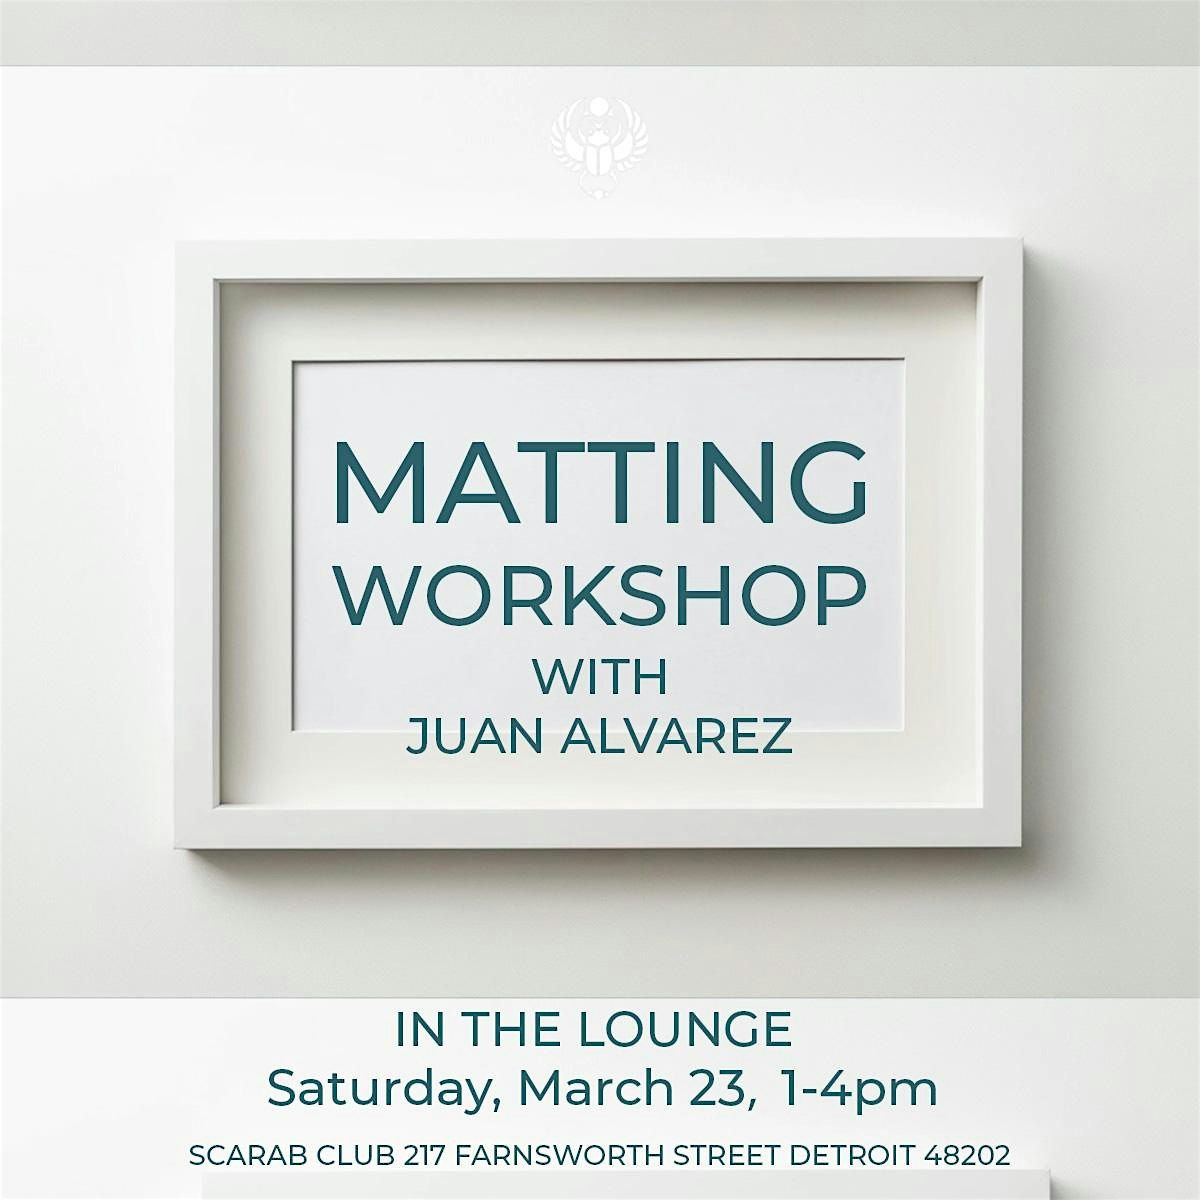 Matting Workshop with Juan Alvarez